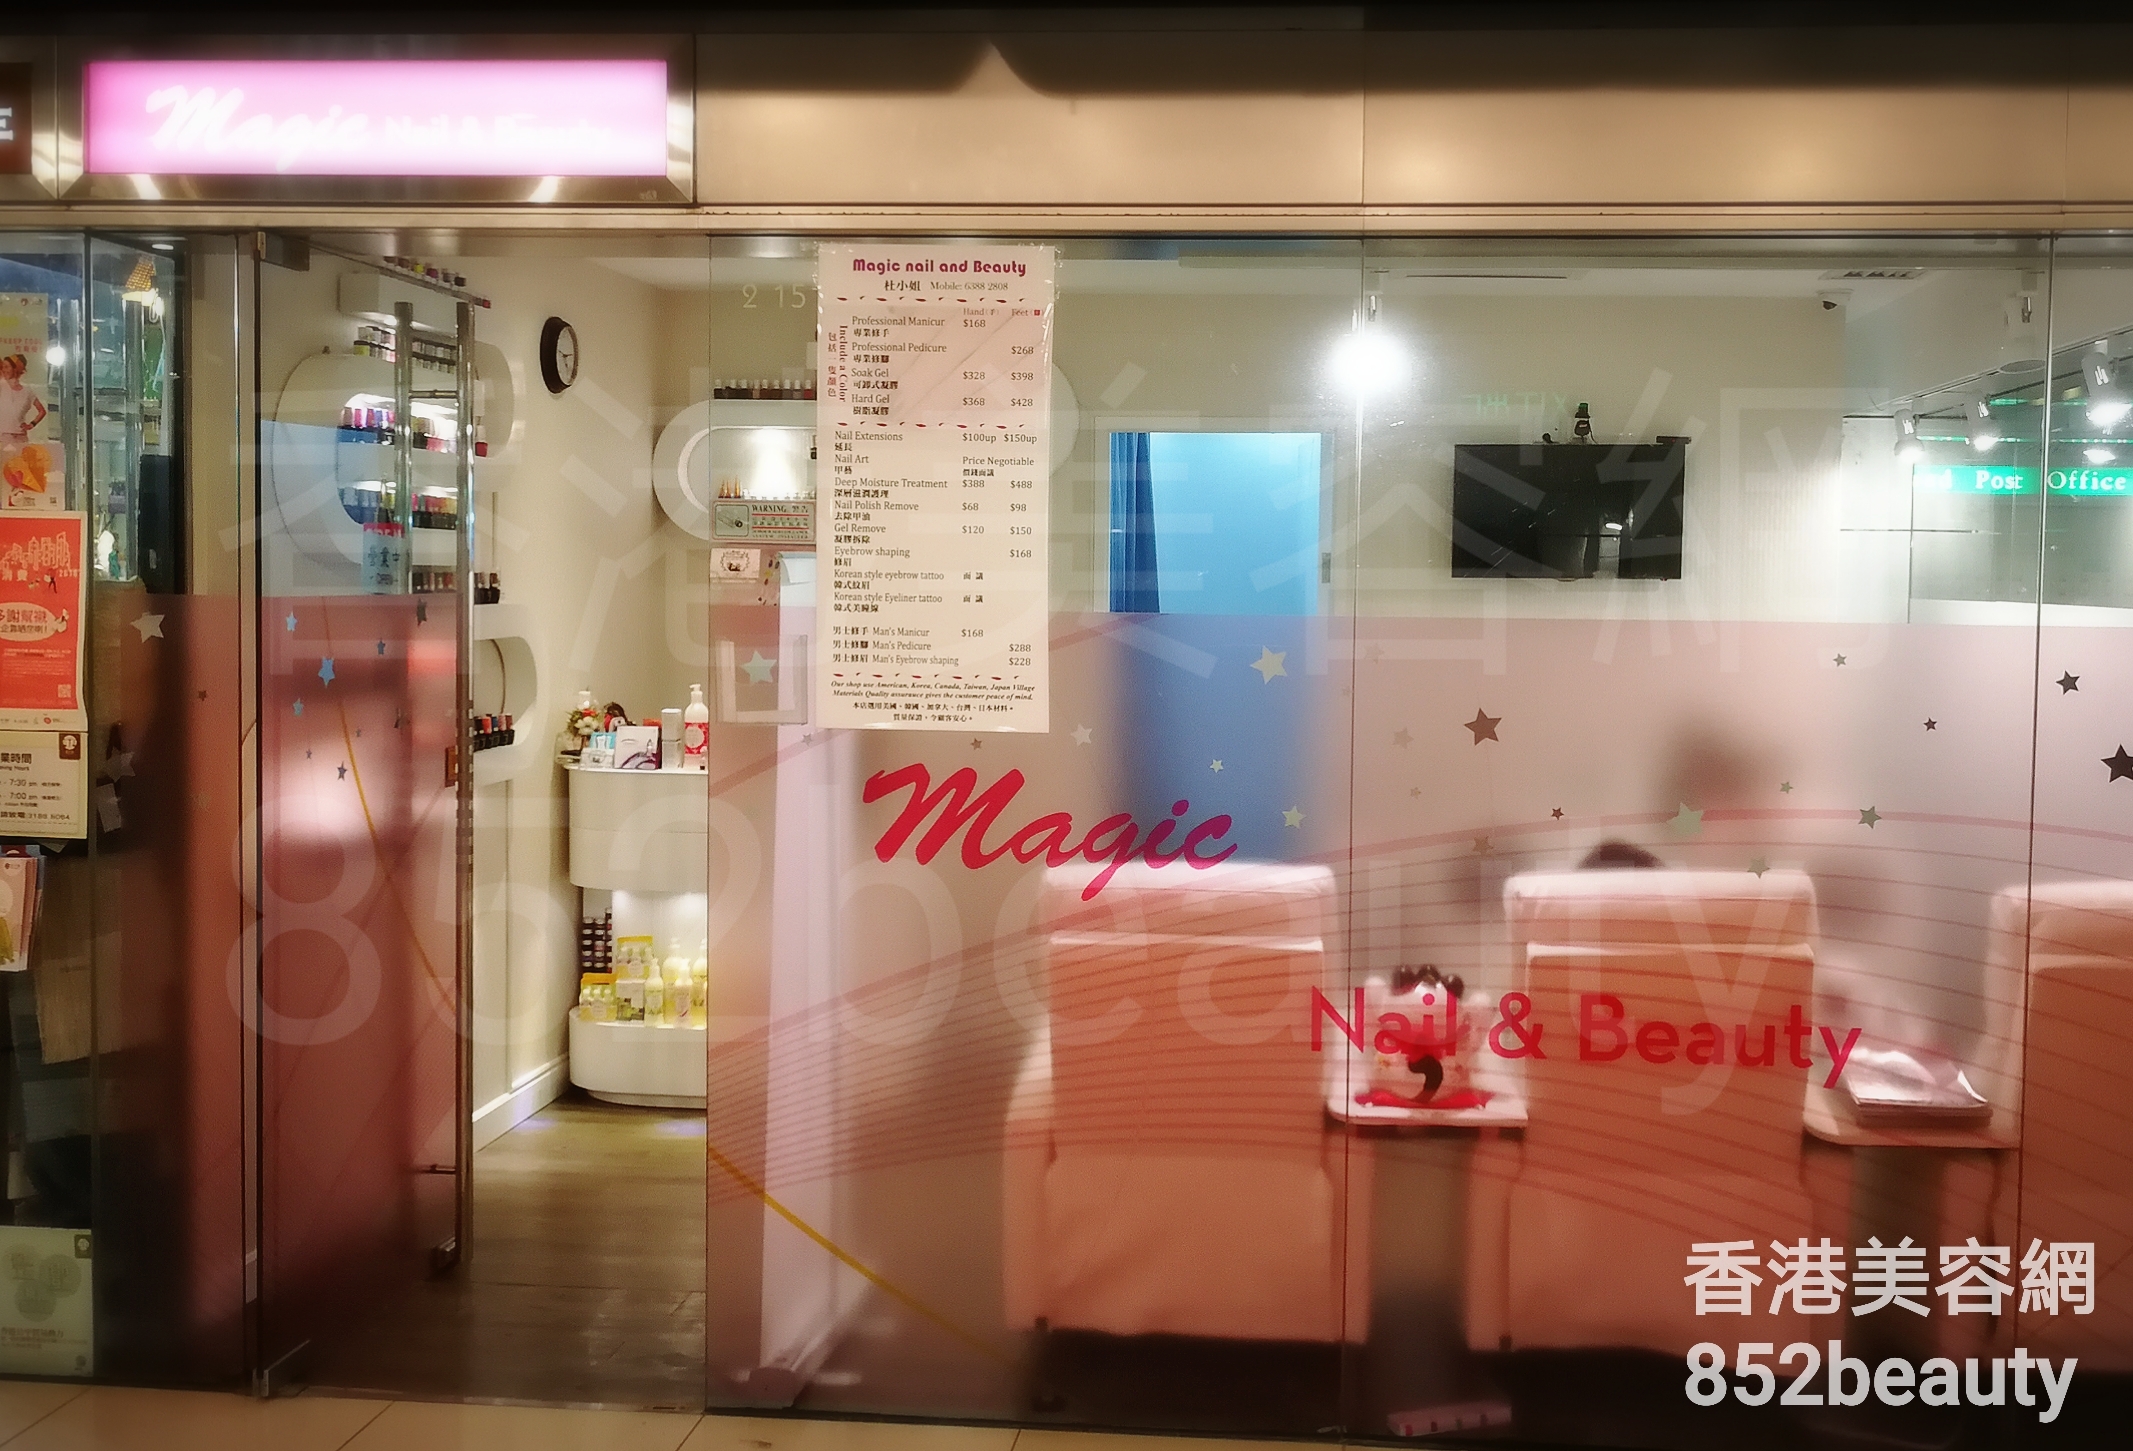 香港美容網 Hong Kong Beauty Salon 美容院 / 美容師: Magic nail and Beauty